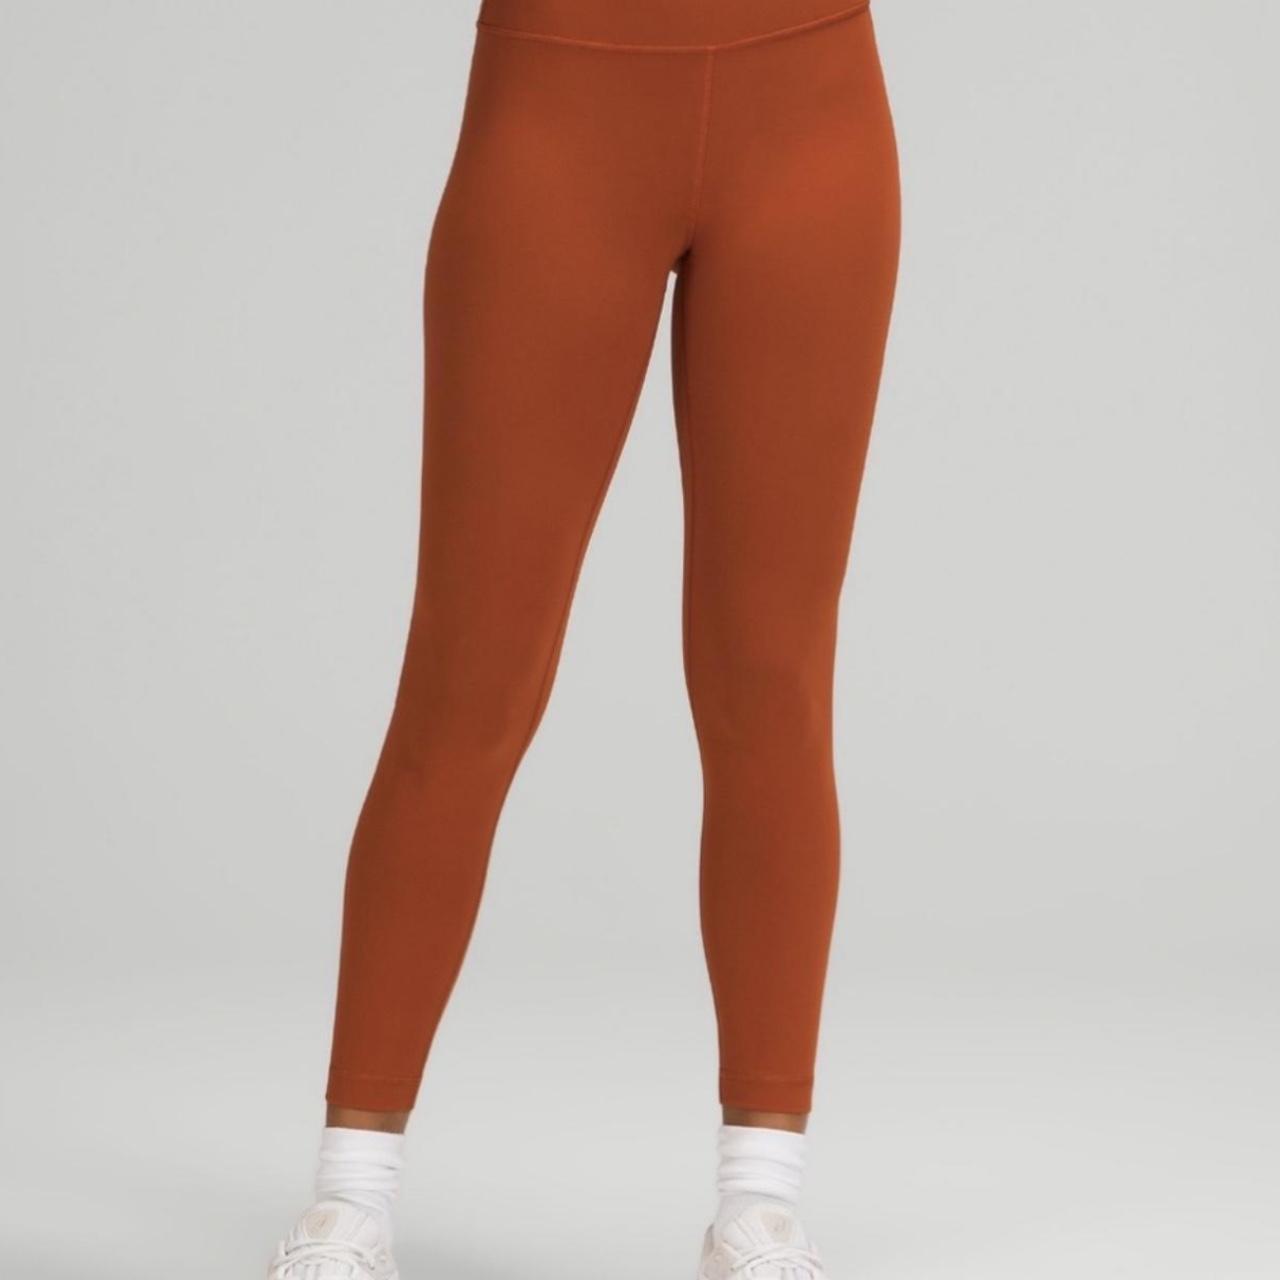 Lululemon leggings burnt orange - Depop